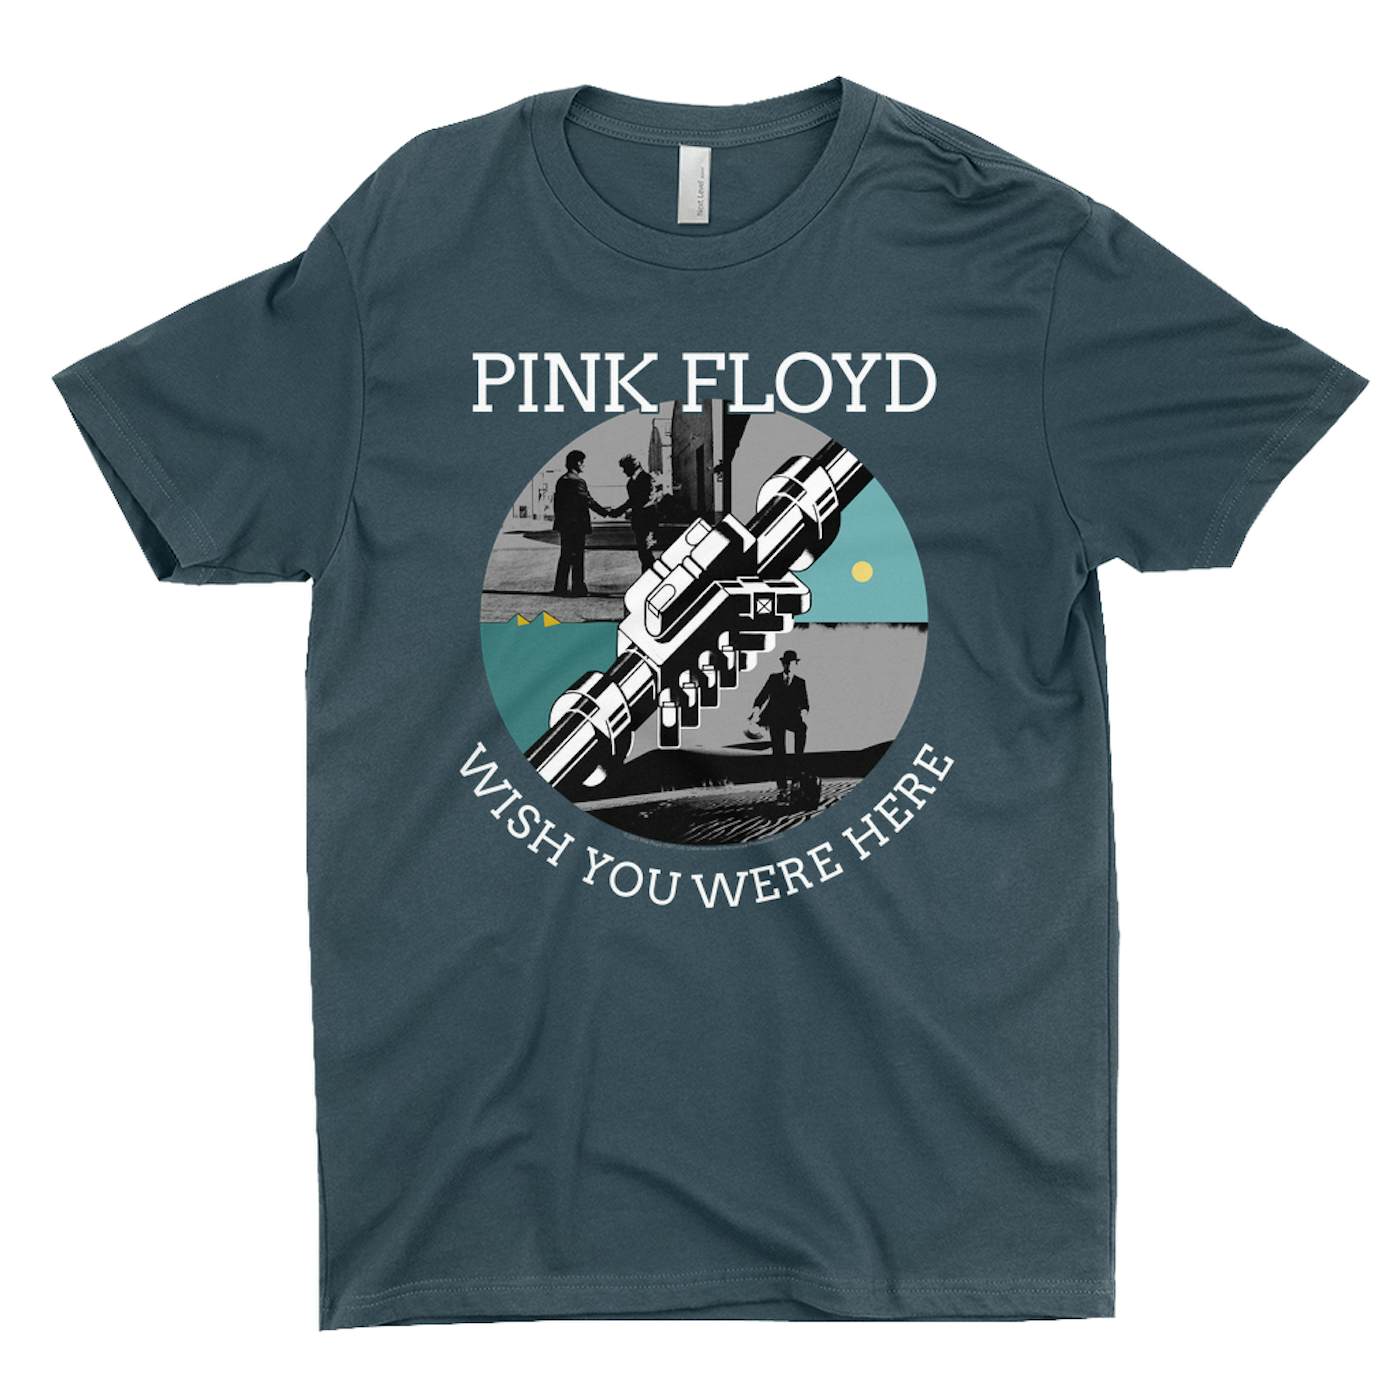 Pink Floyd T-Shirt | Wish You Were Here Album Collage Pink Floyd Shirt